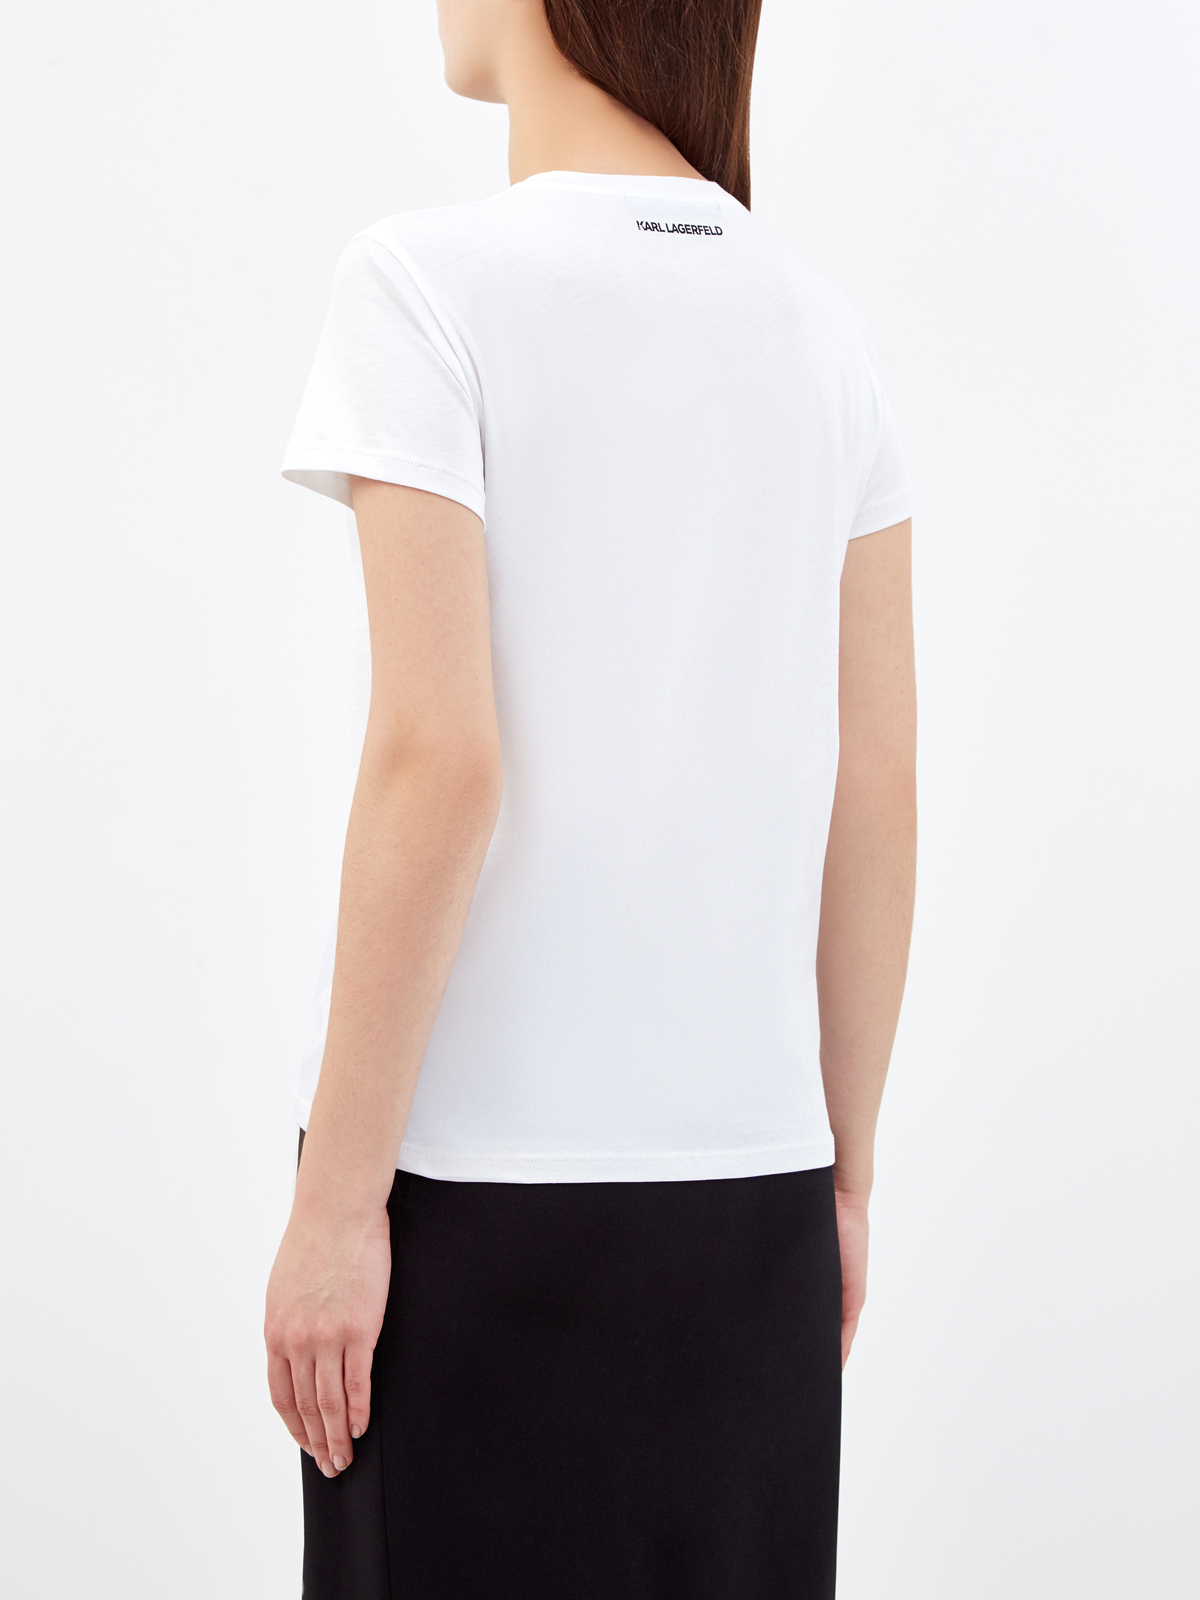 Хлопковая футболка с фактурным декором из букле KARL LAGERFELD, цвет белый, размер XS;S;M;L;XL - фото 4